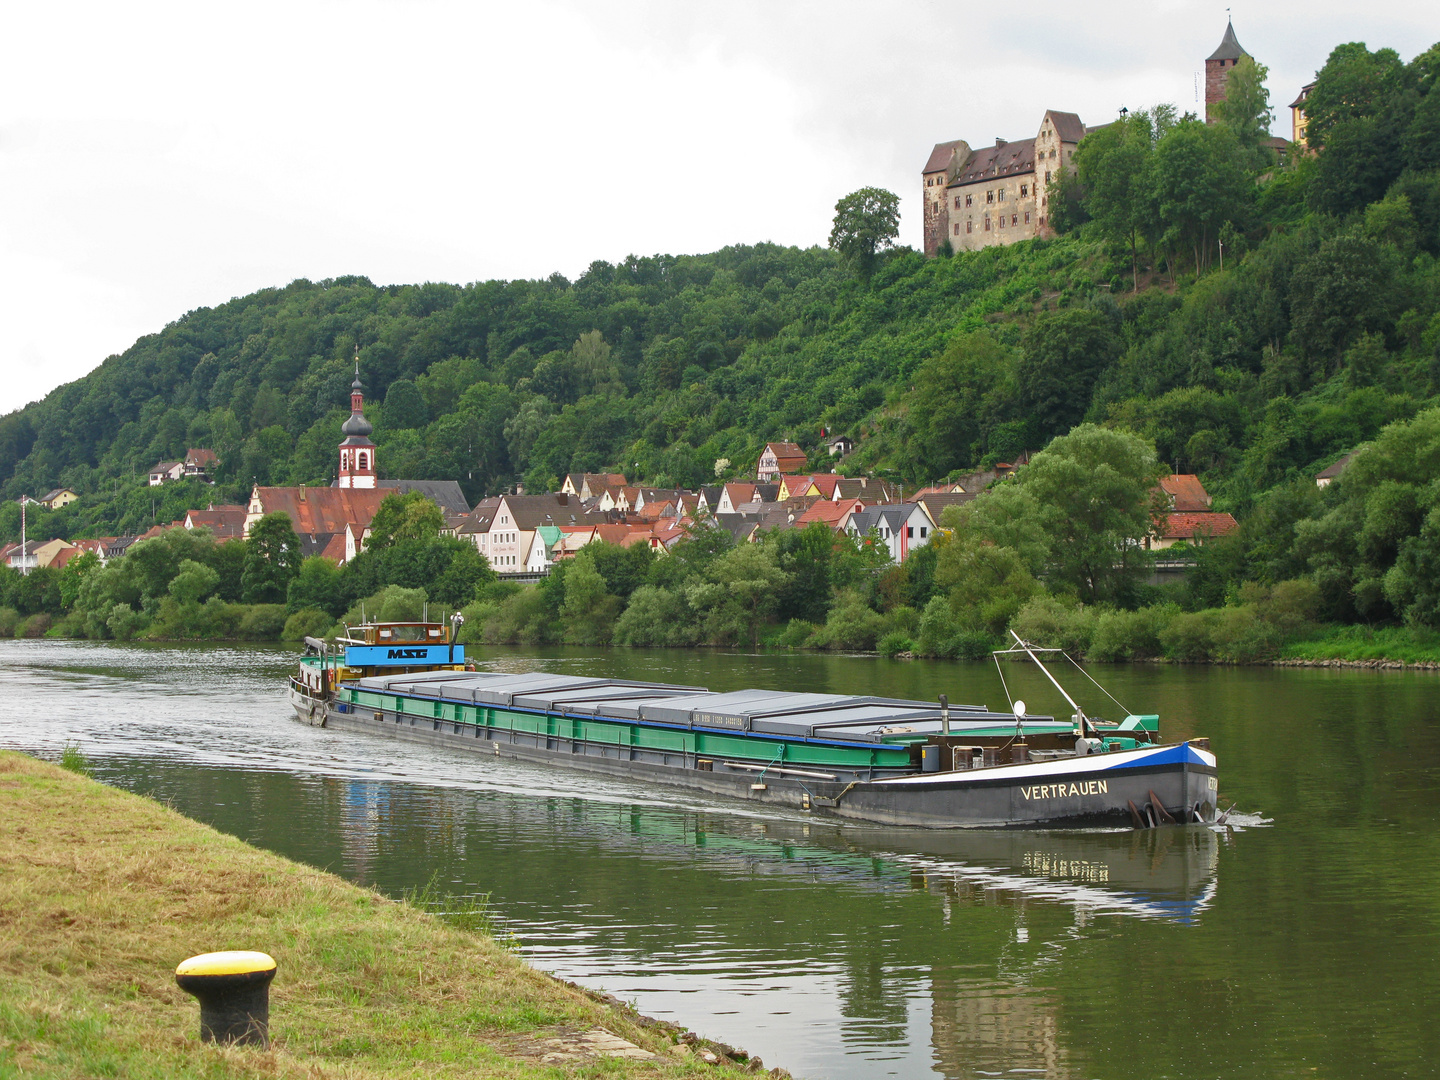 Burg Rothenfels am Main